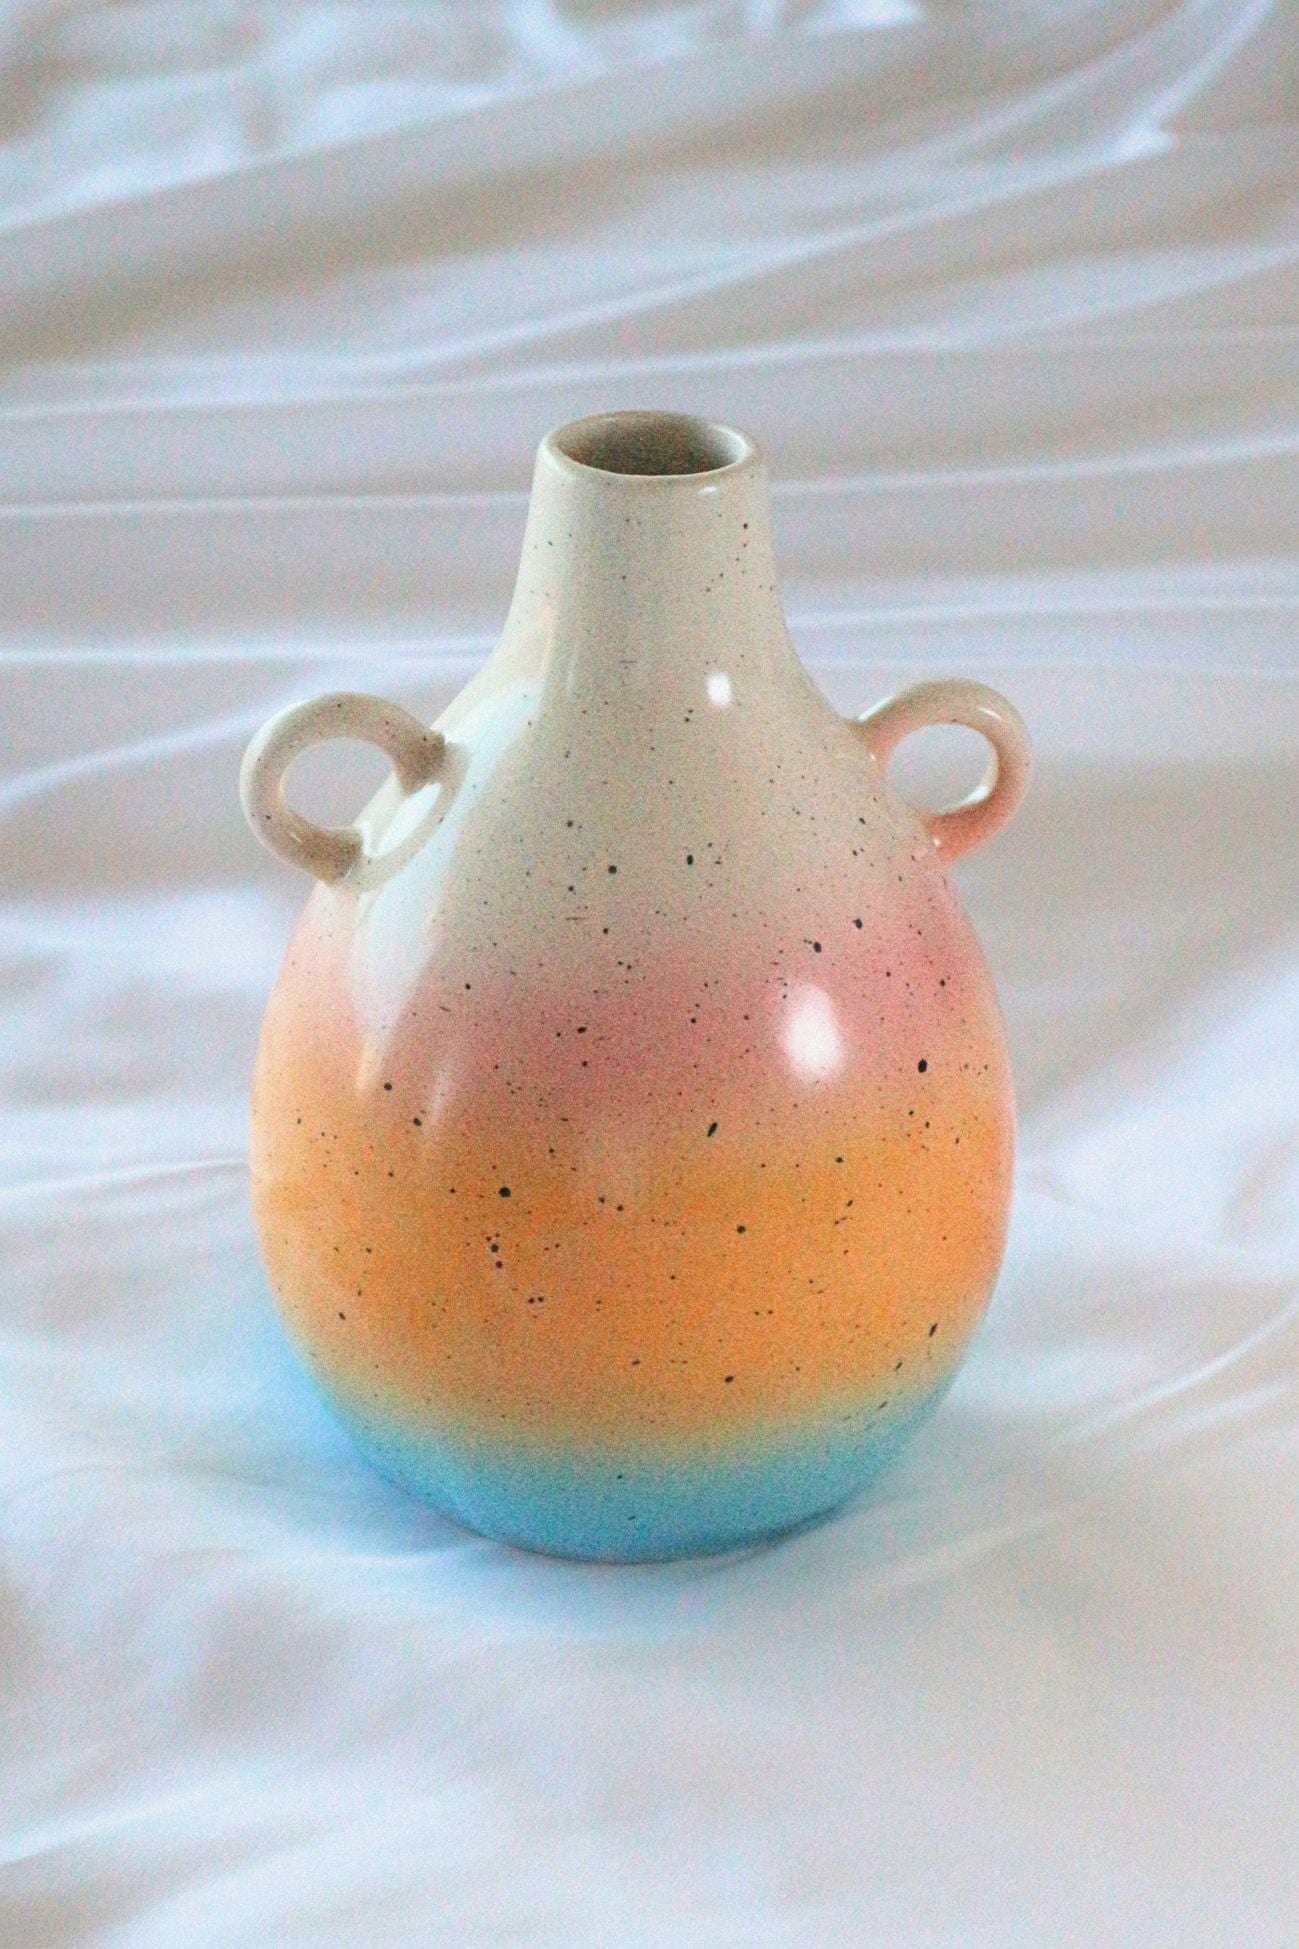 Item International Jace Jace - Vaso in ceramica con sfumature di colore | Item International